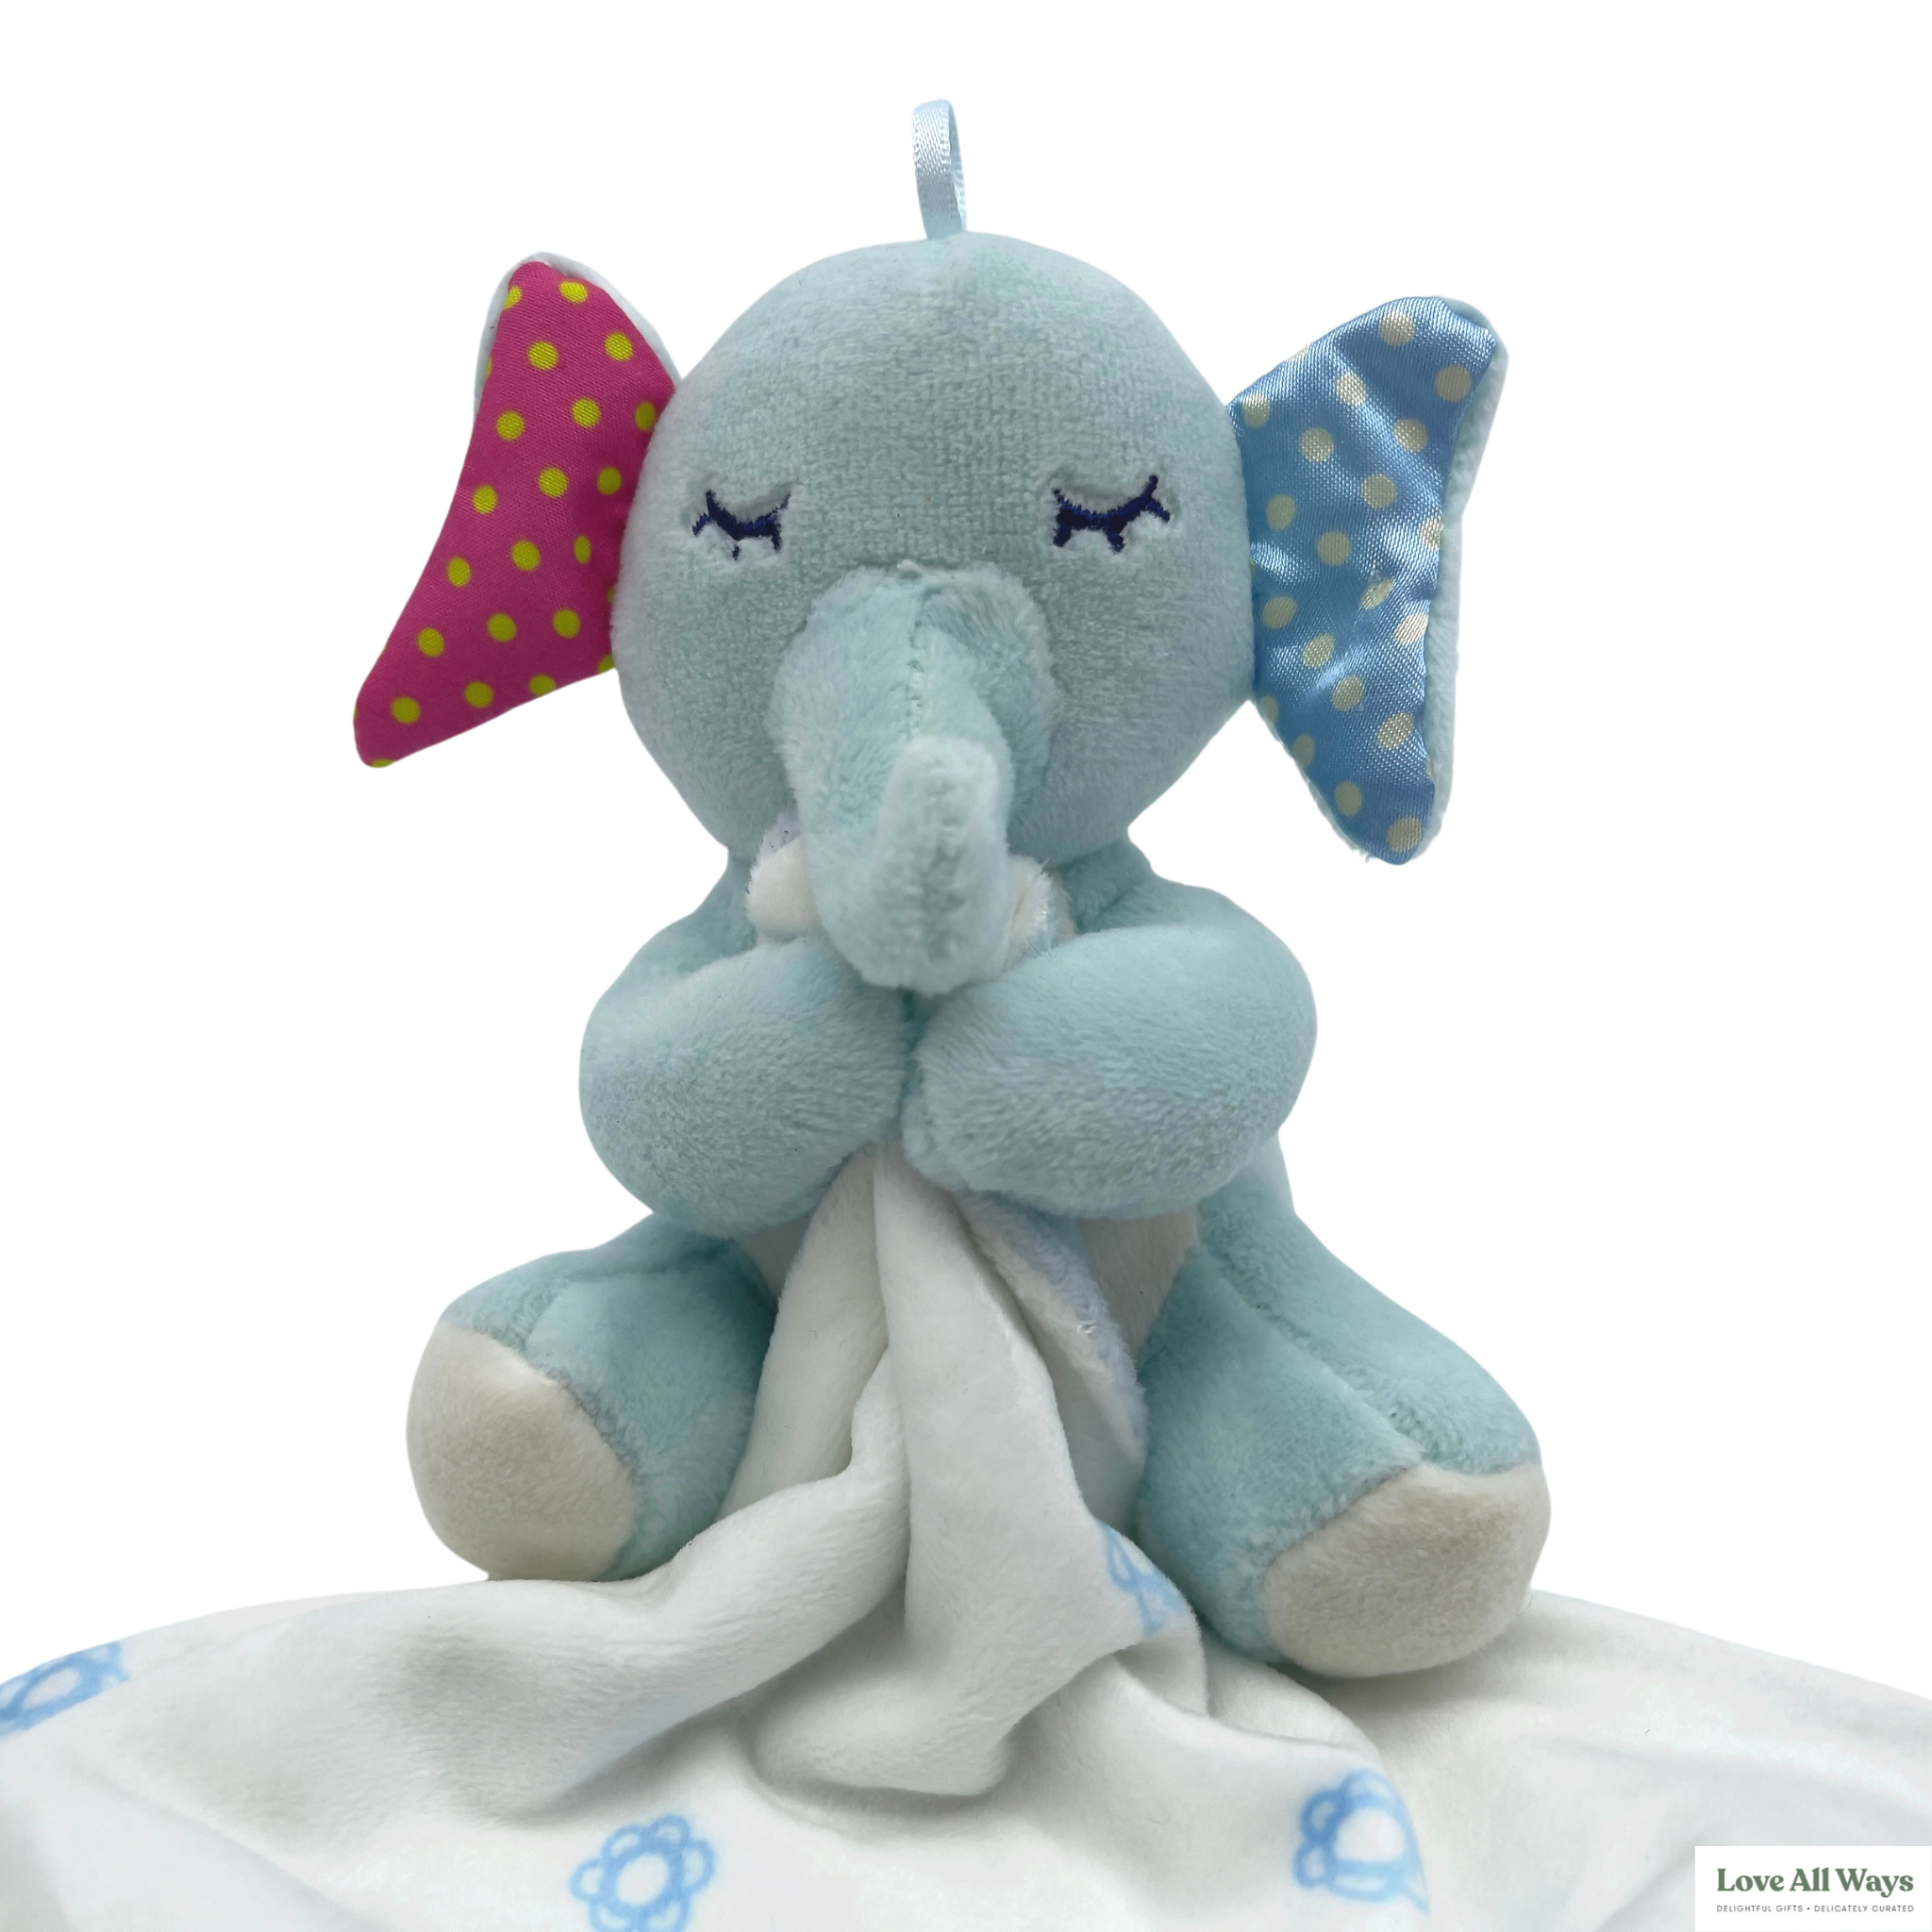 Love All Ways Soft Plush Security Blanket - Blue Elephant close up